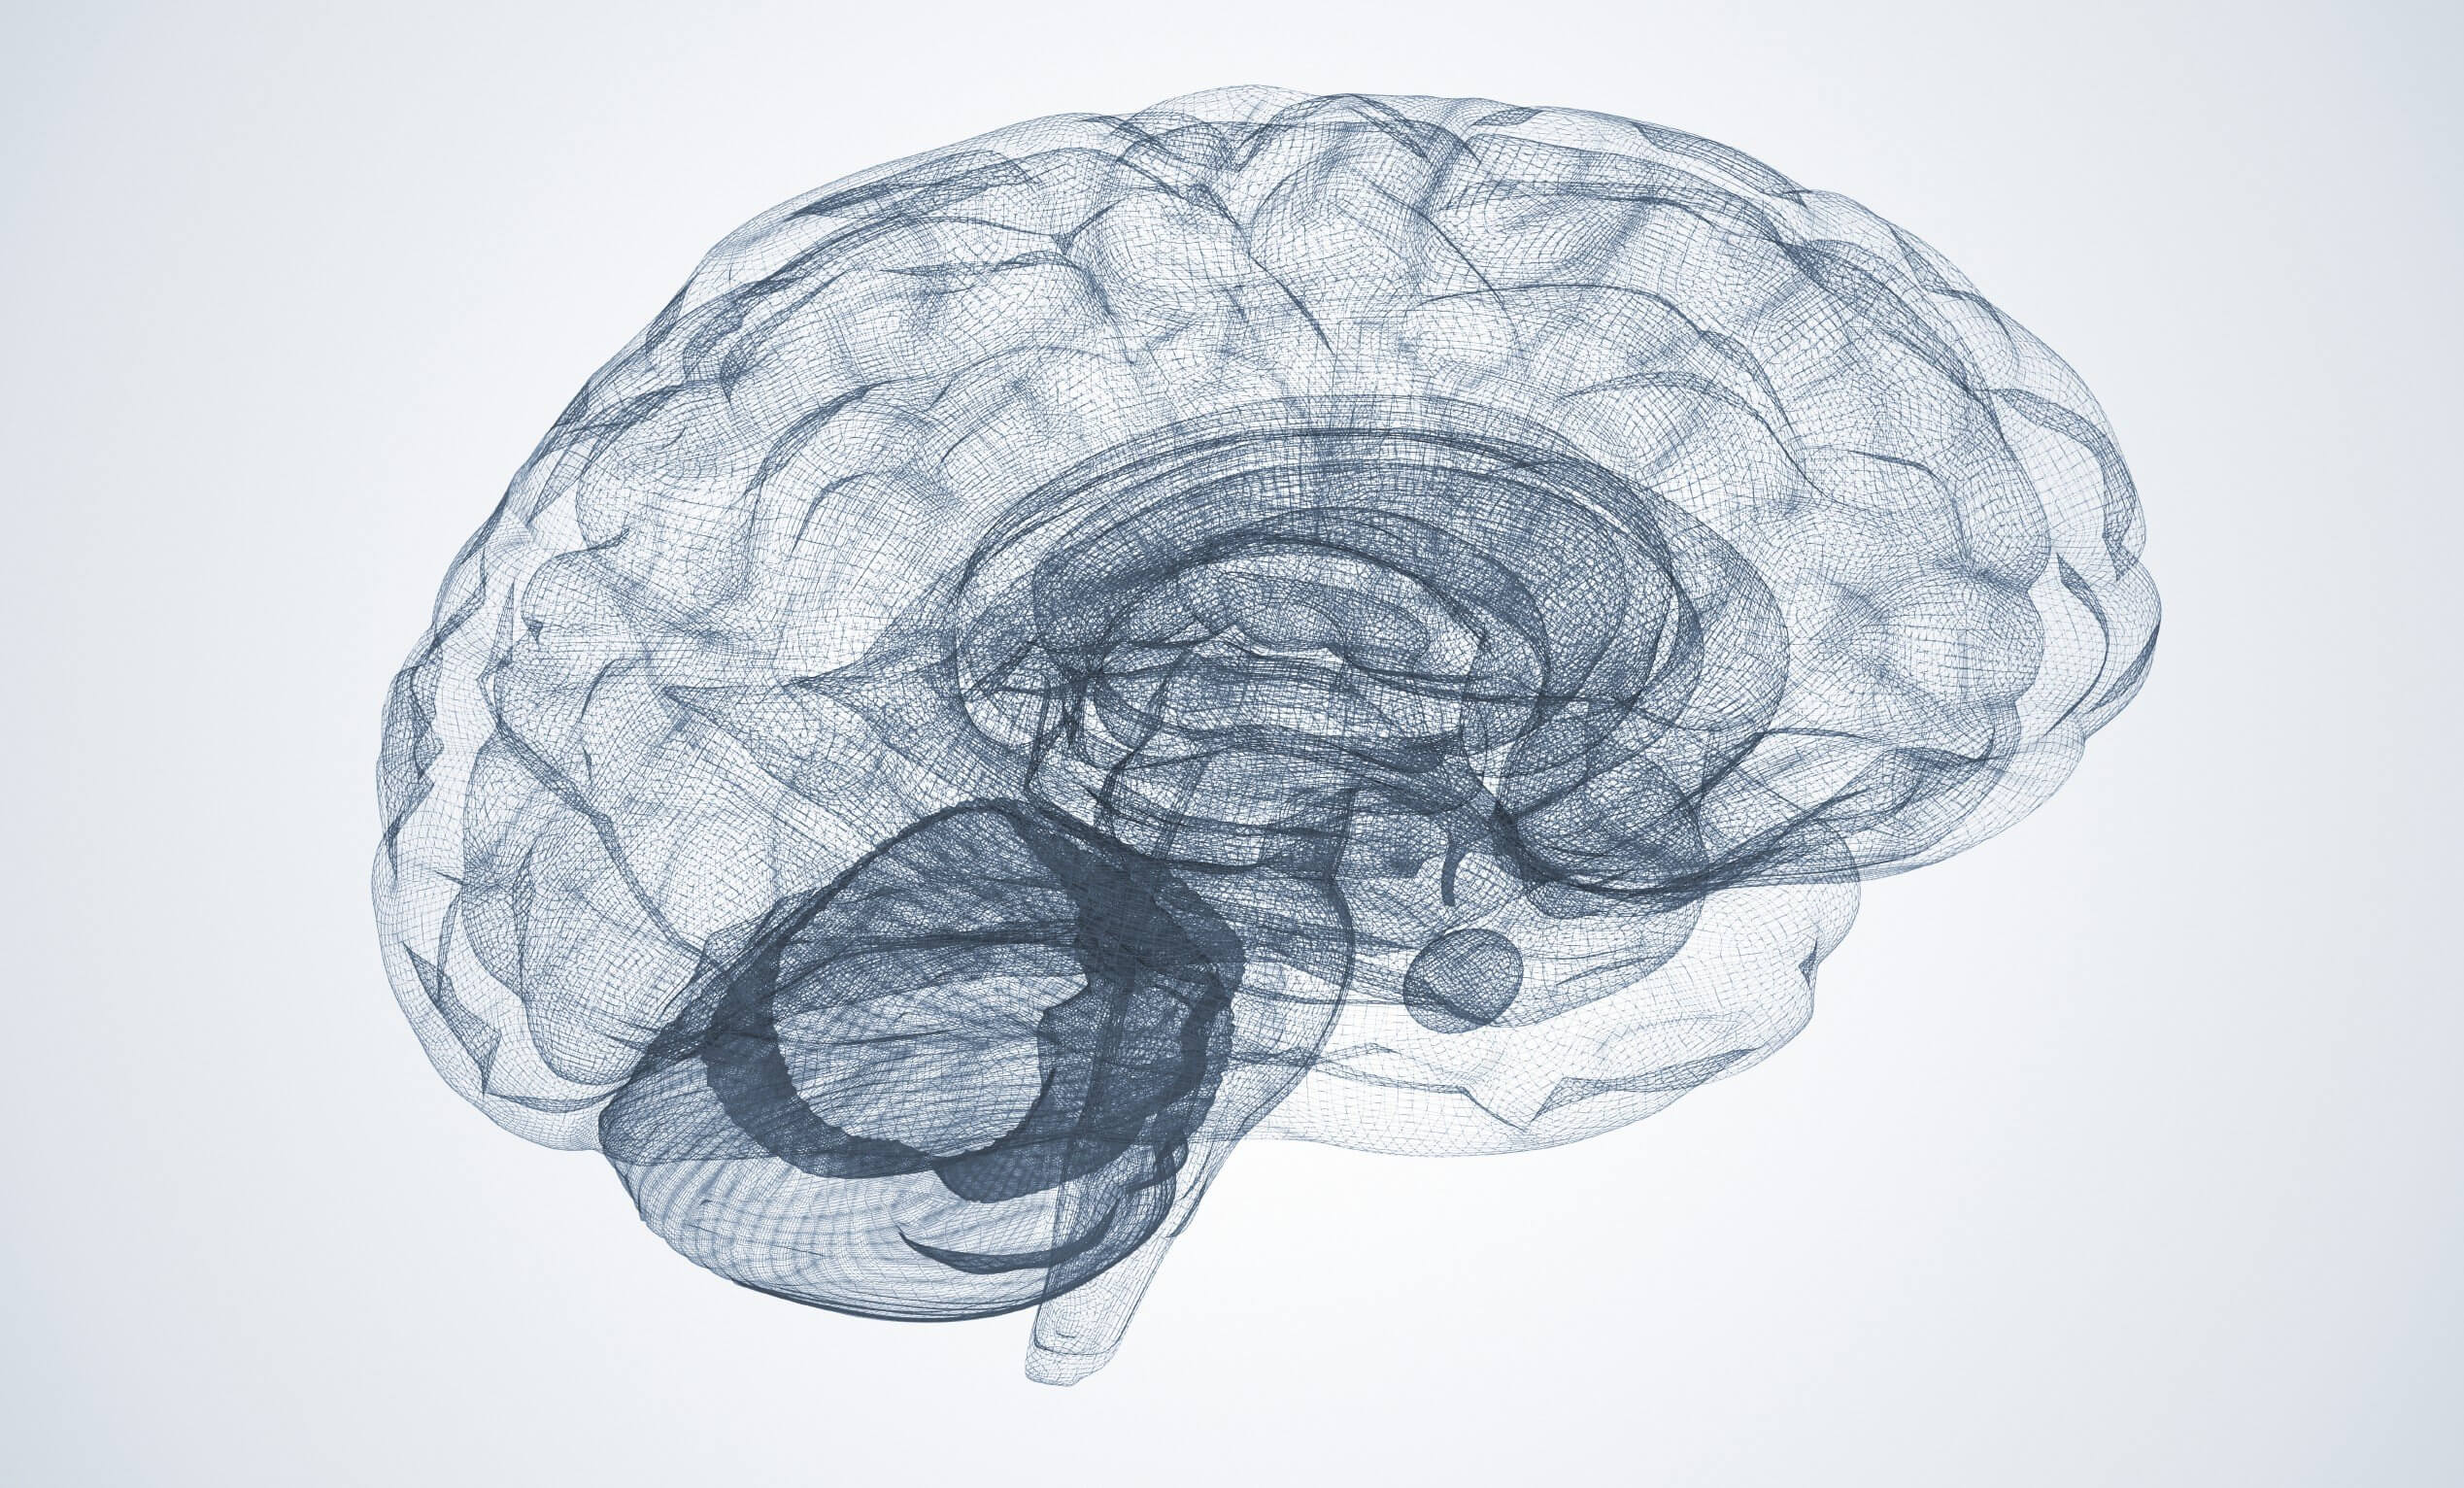 Simple Tasks Don't Test Brain's True Complexity - TMC News